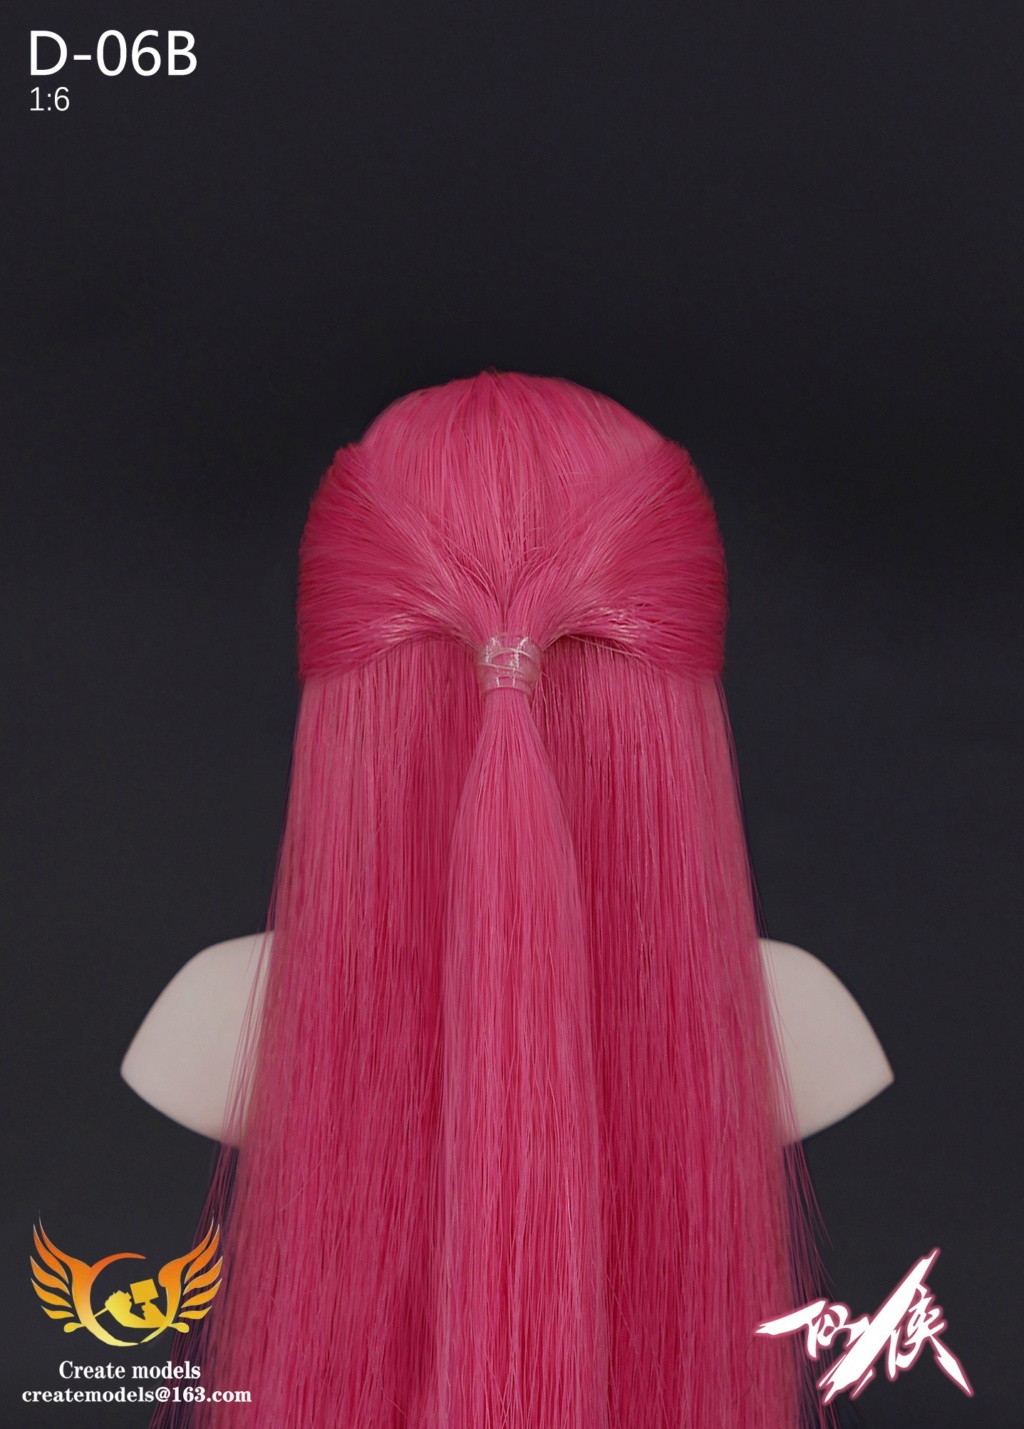 Createmodels - NEW PRODUCT: Createmodels: 1/6 Xianxia series female head - AB two hair colors (D-06) 15341210